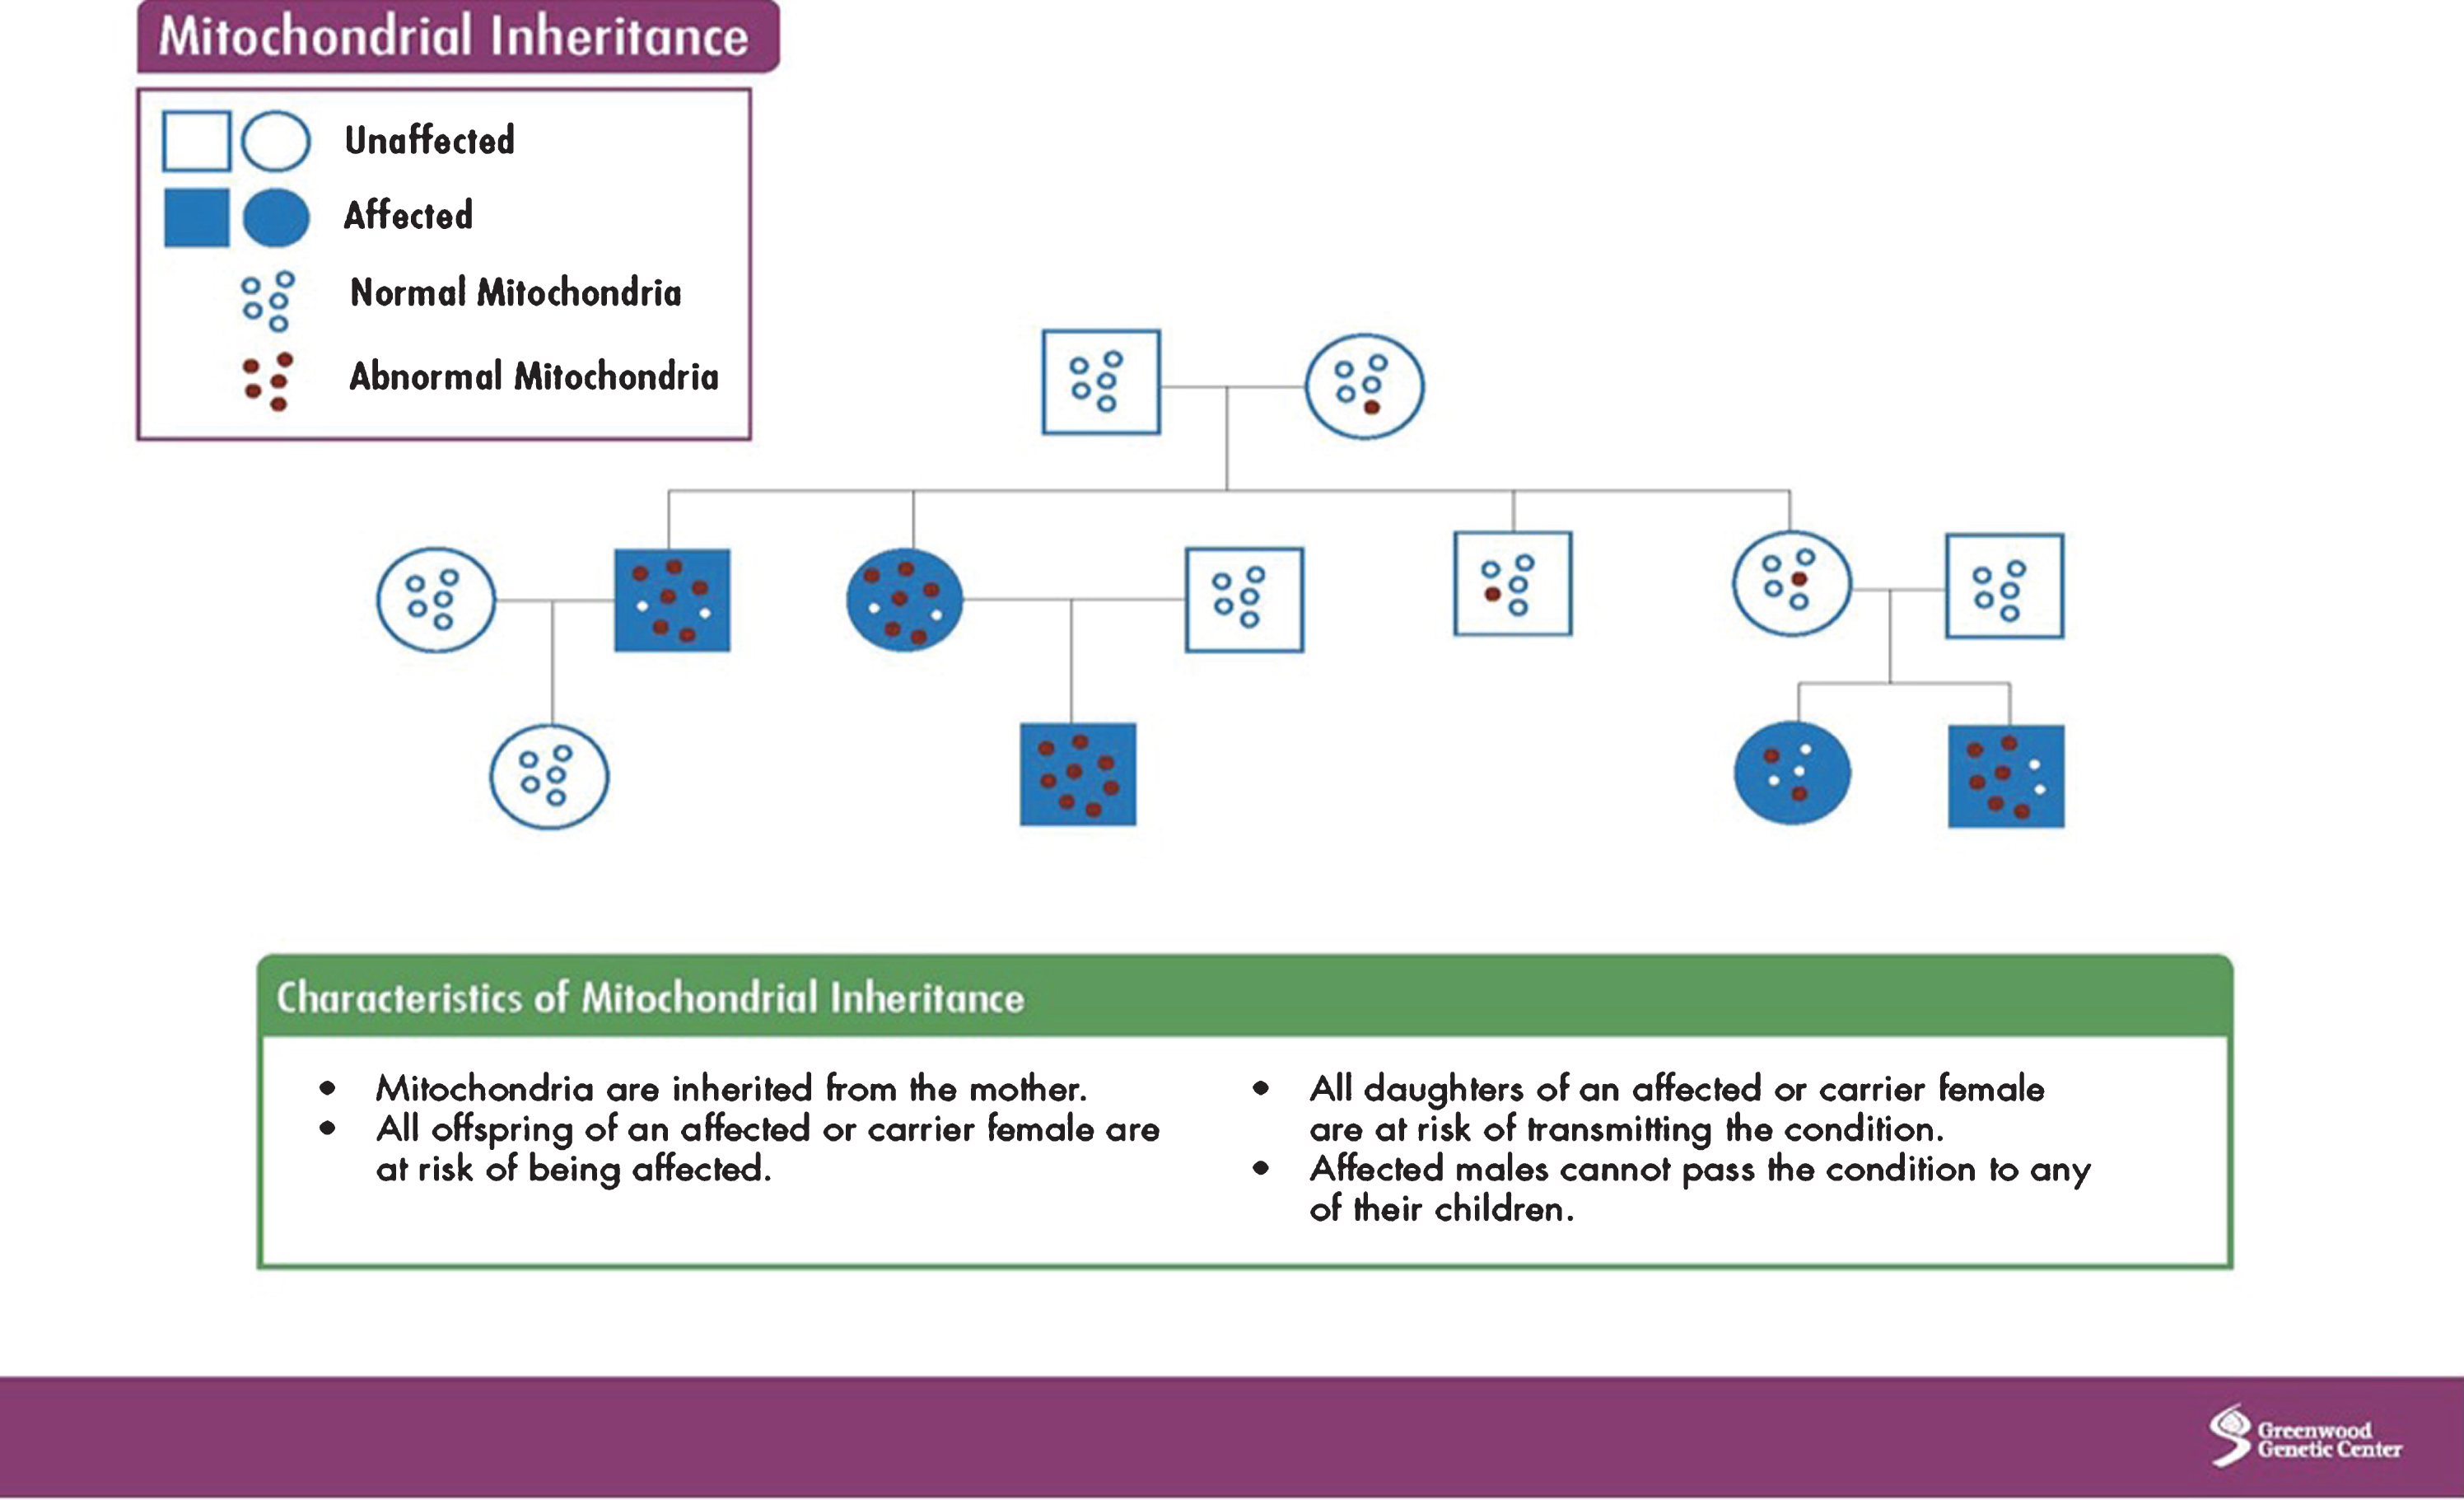 Mitochondrial inheritance. Source: Greenwood Genetic Center.